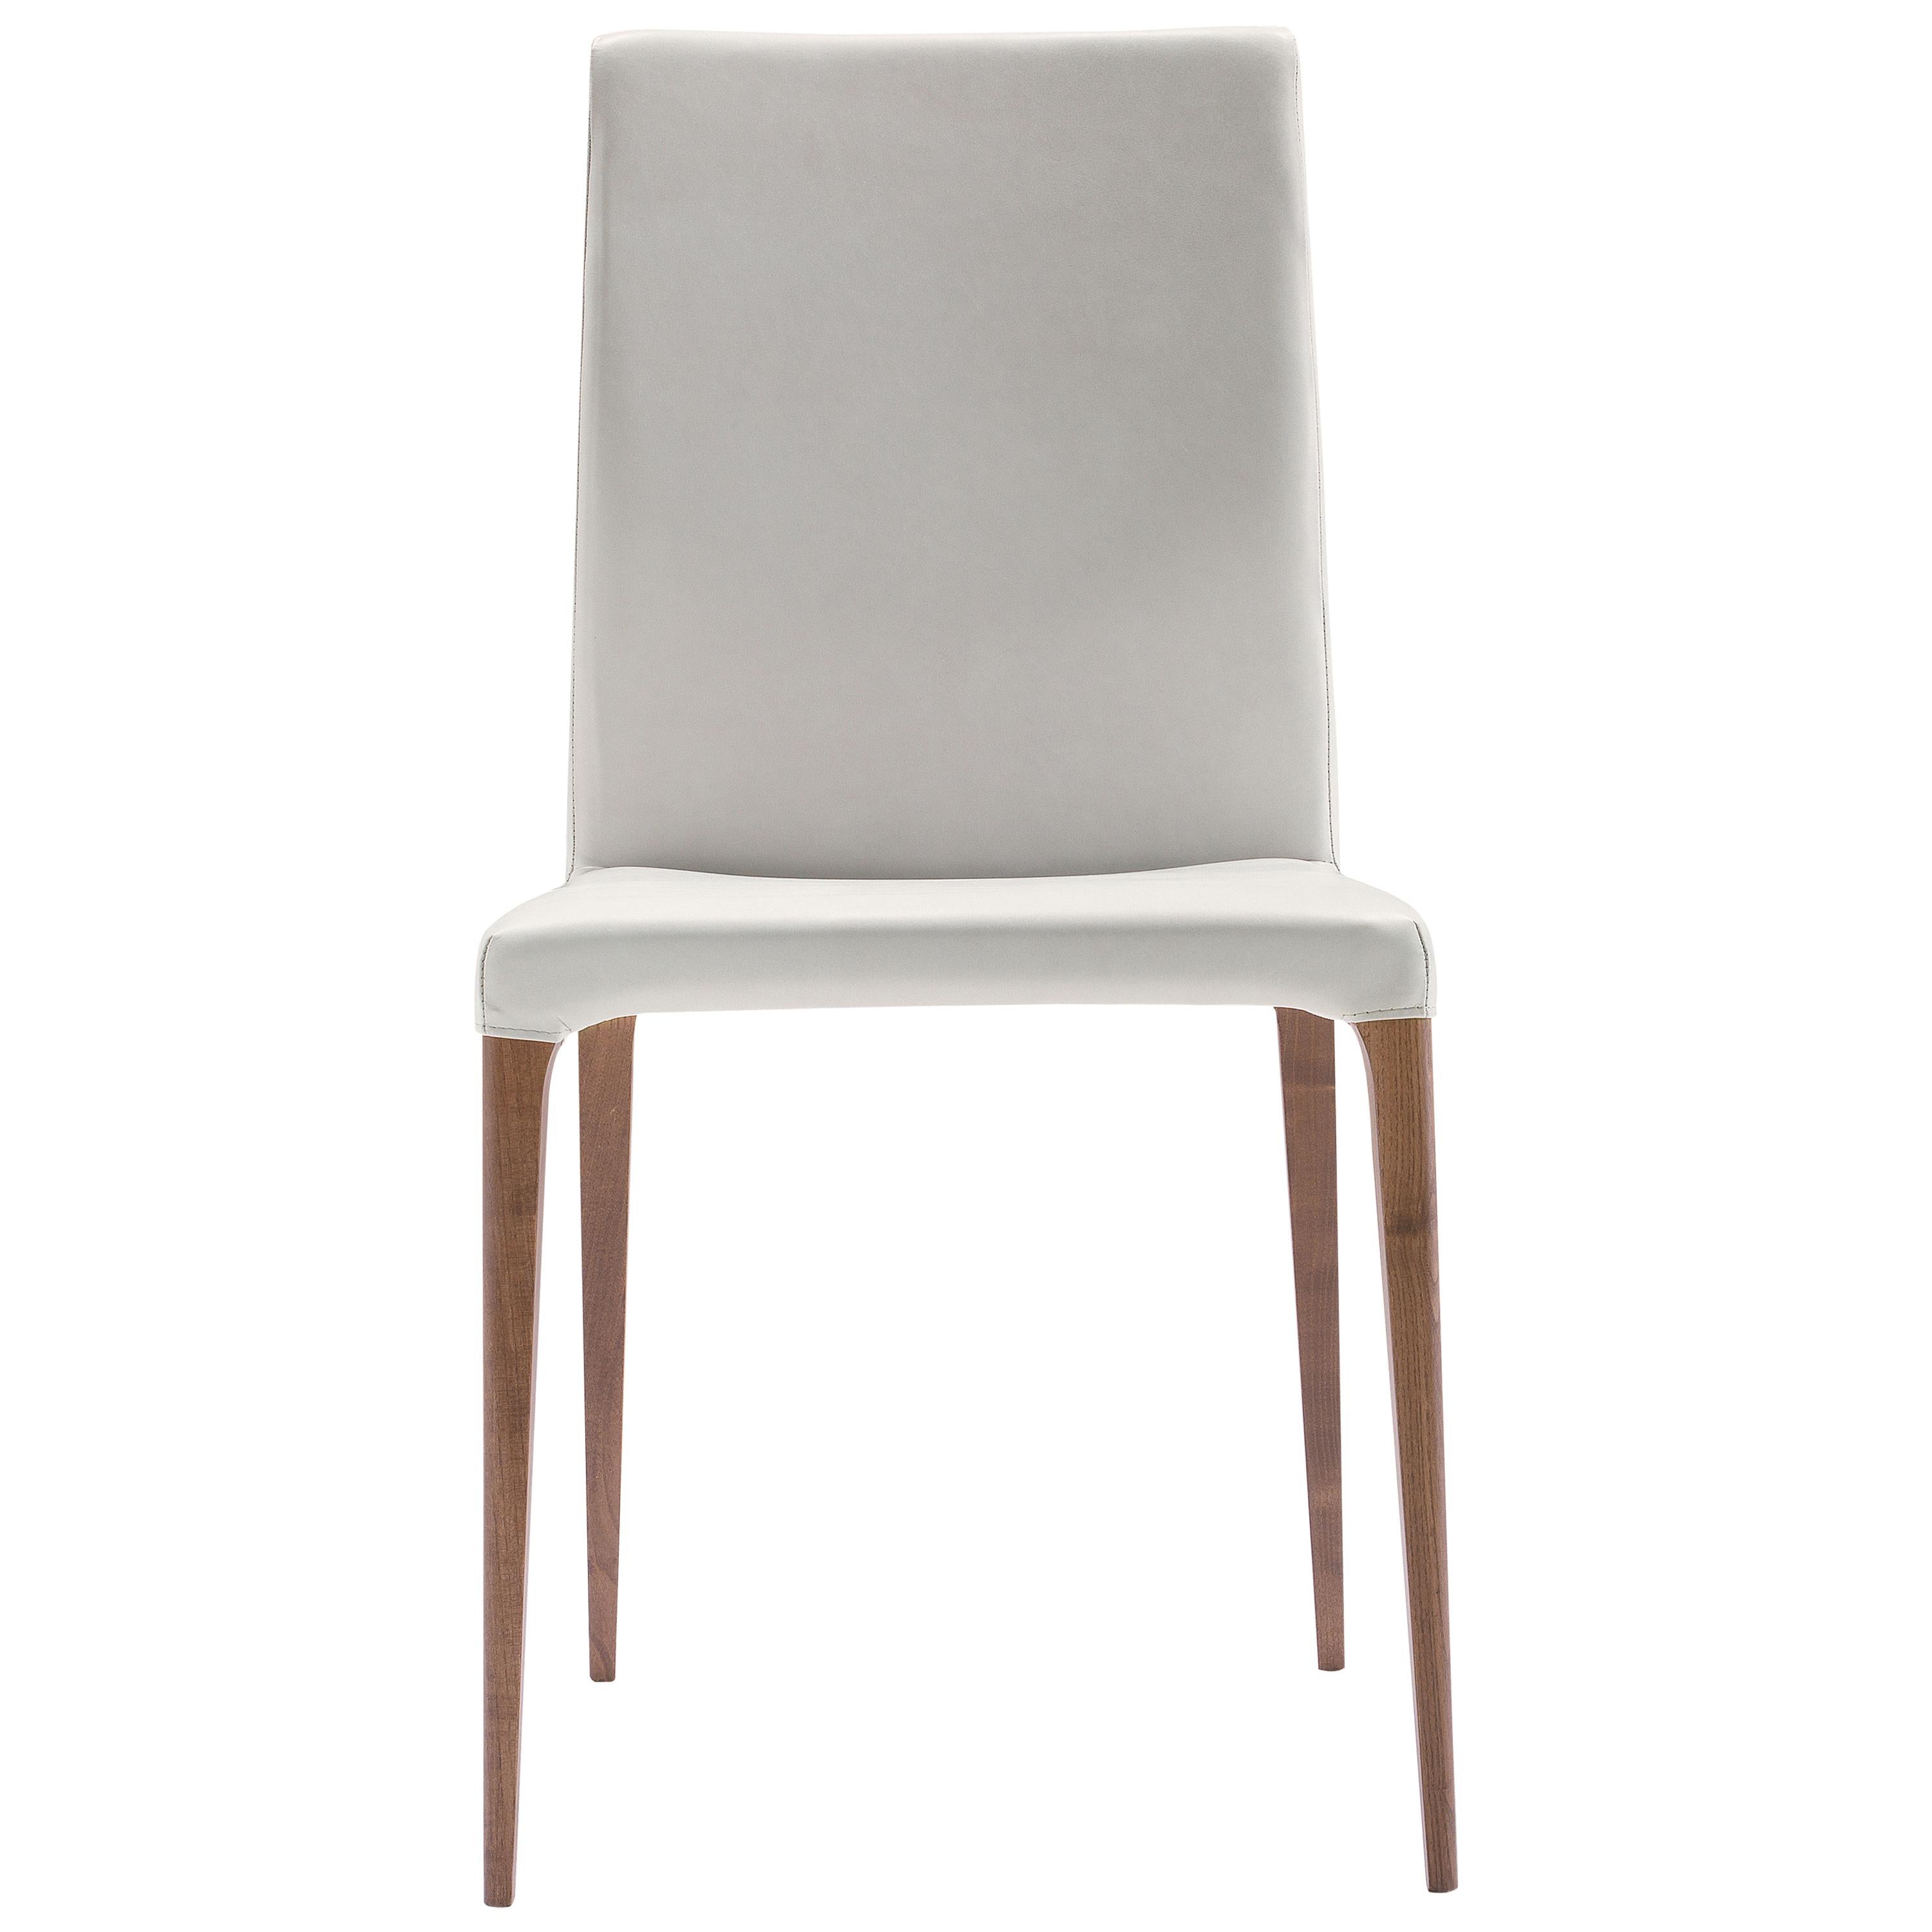 Eva Chair in Ash and White Leather by Studio Tecnico Pacini & Cappellini For Sale